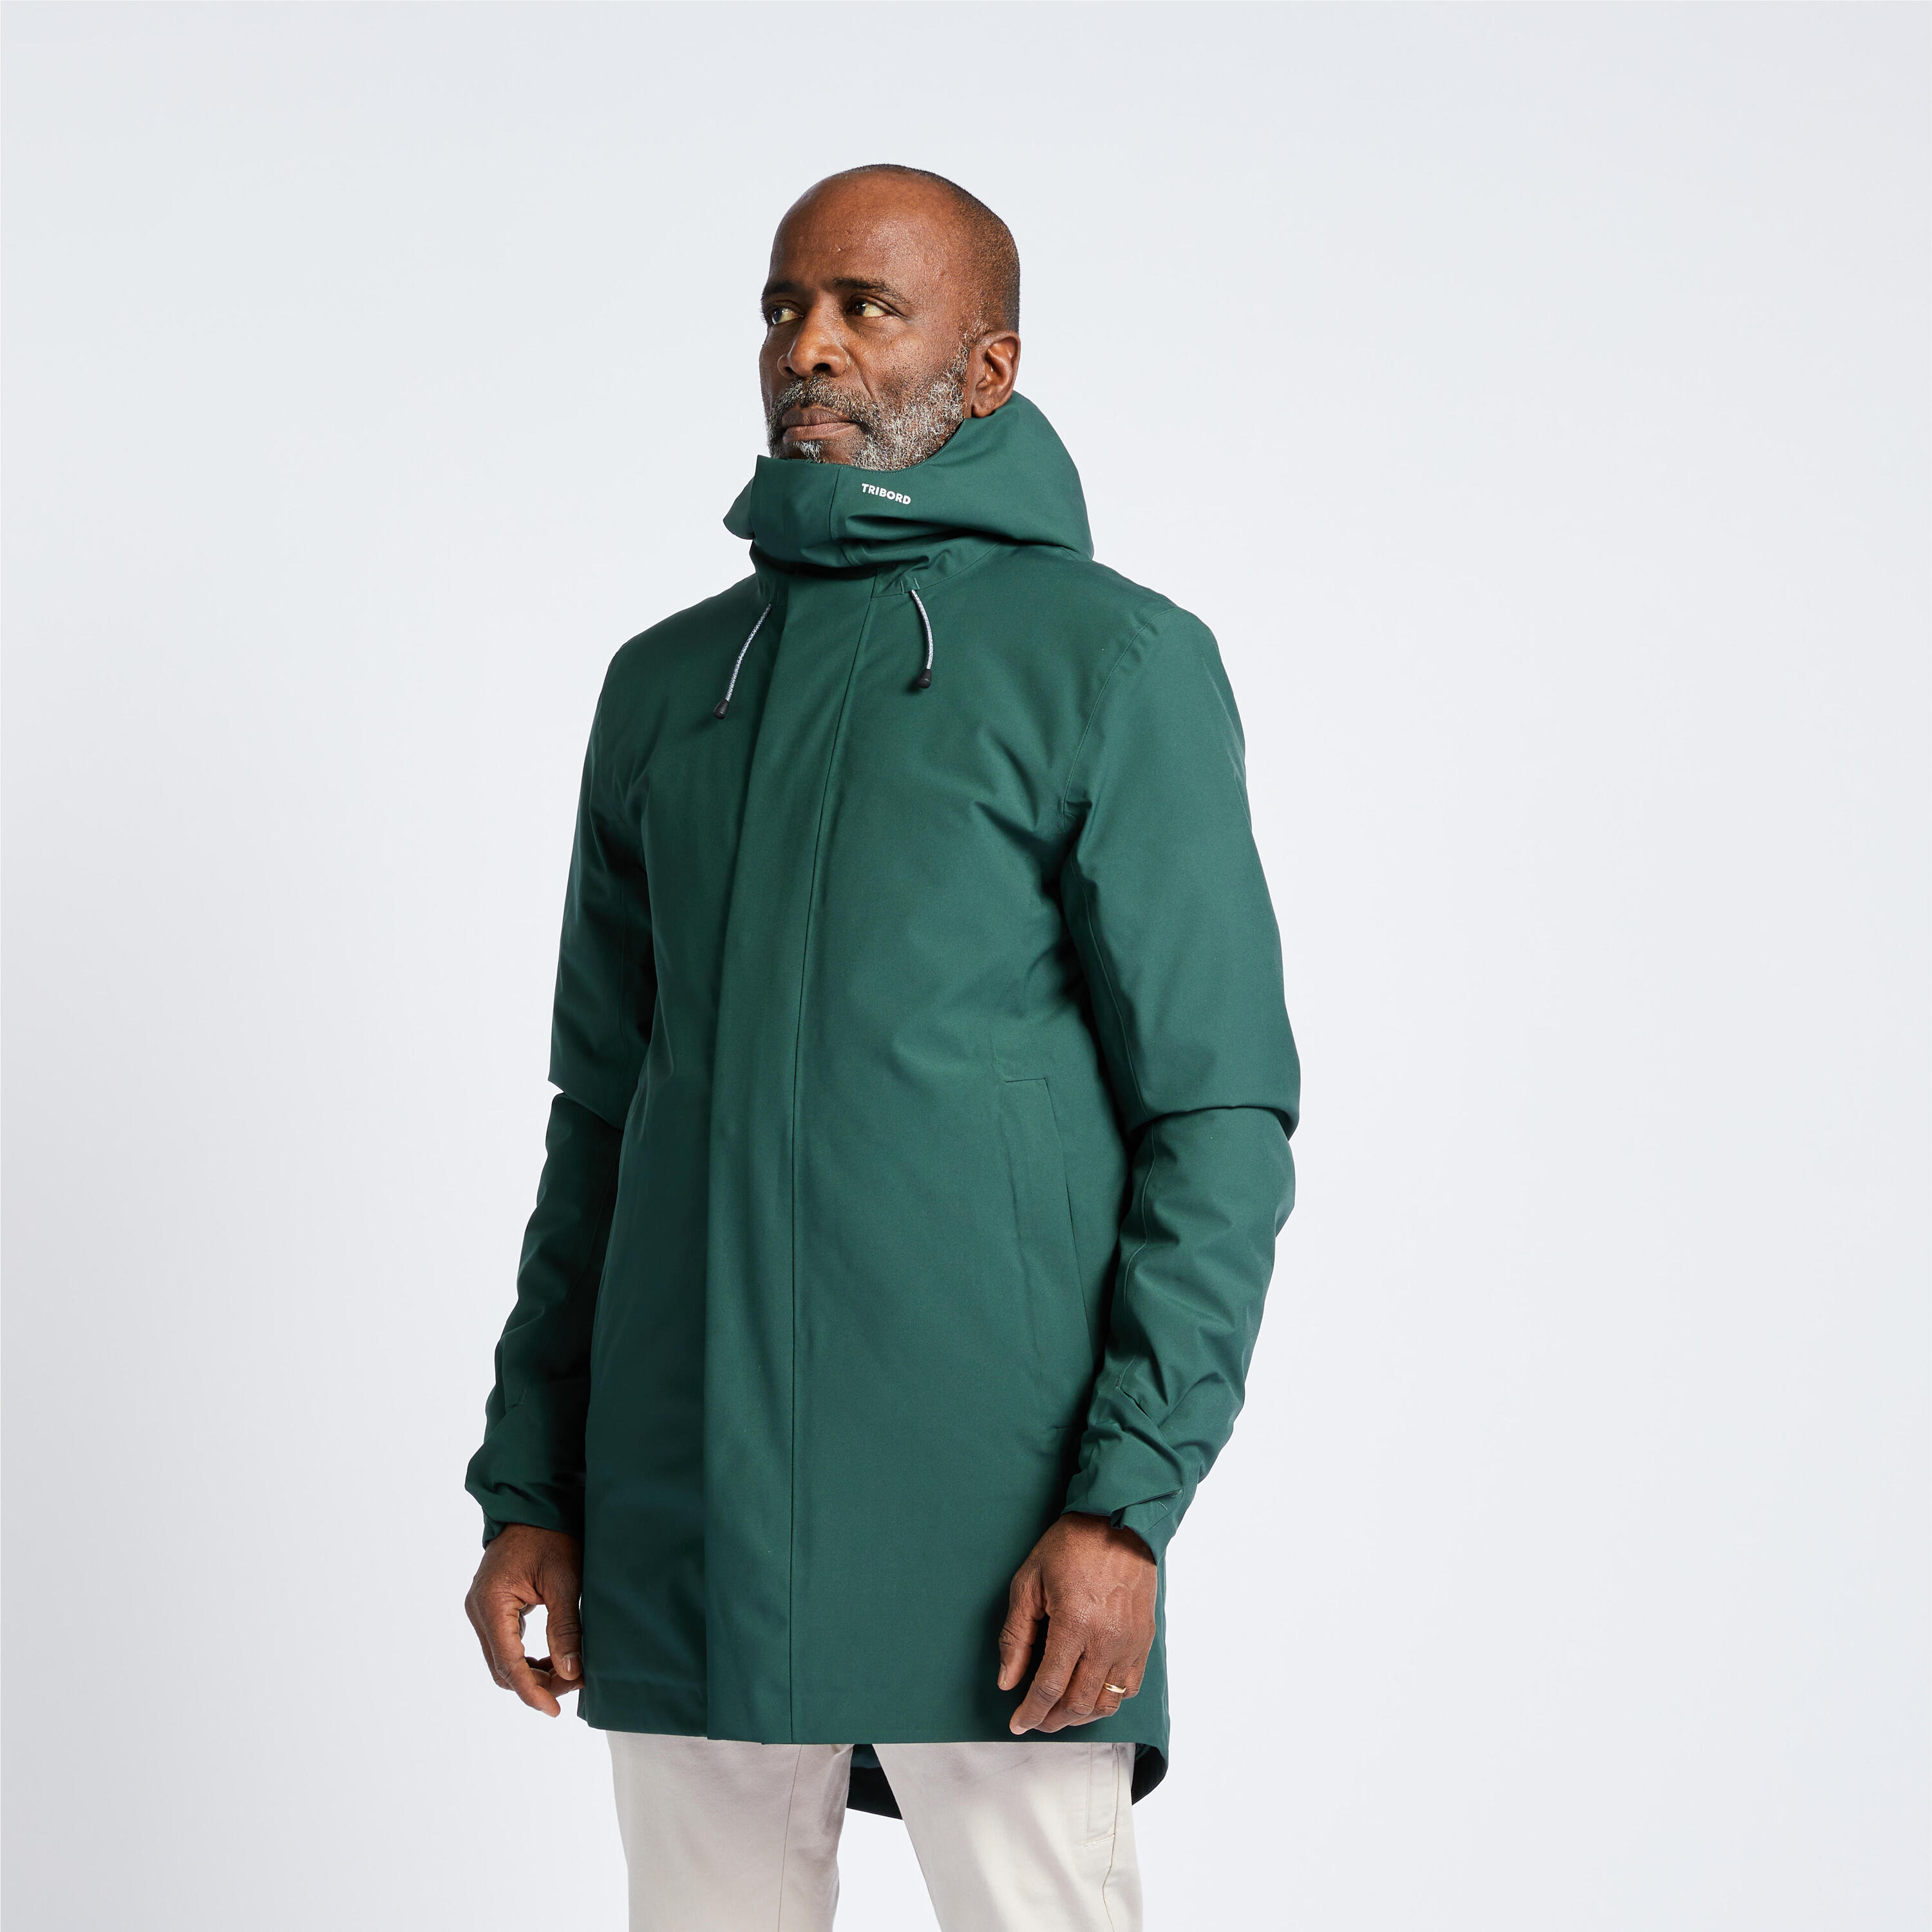 Men's warm waterproof windproof sailing jacket - SAILING 300 green TRIBORD